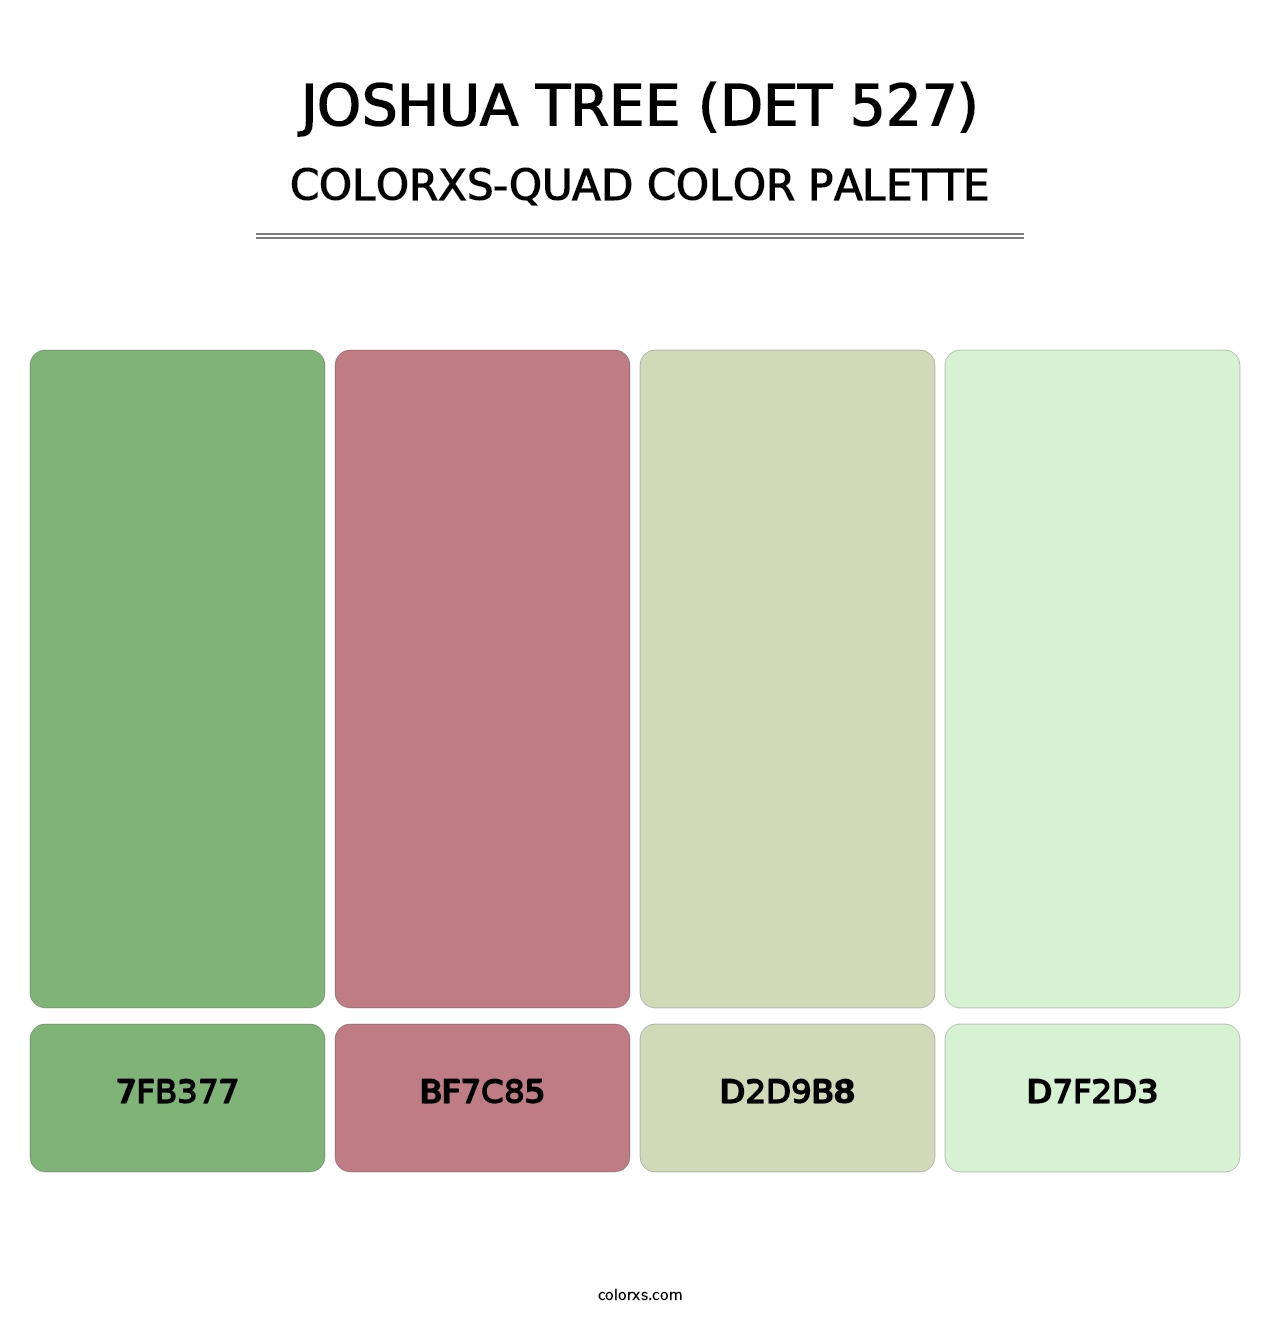 Joshua Tree (DET 527) - Colorxs Quad Palette